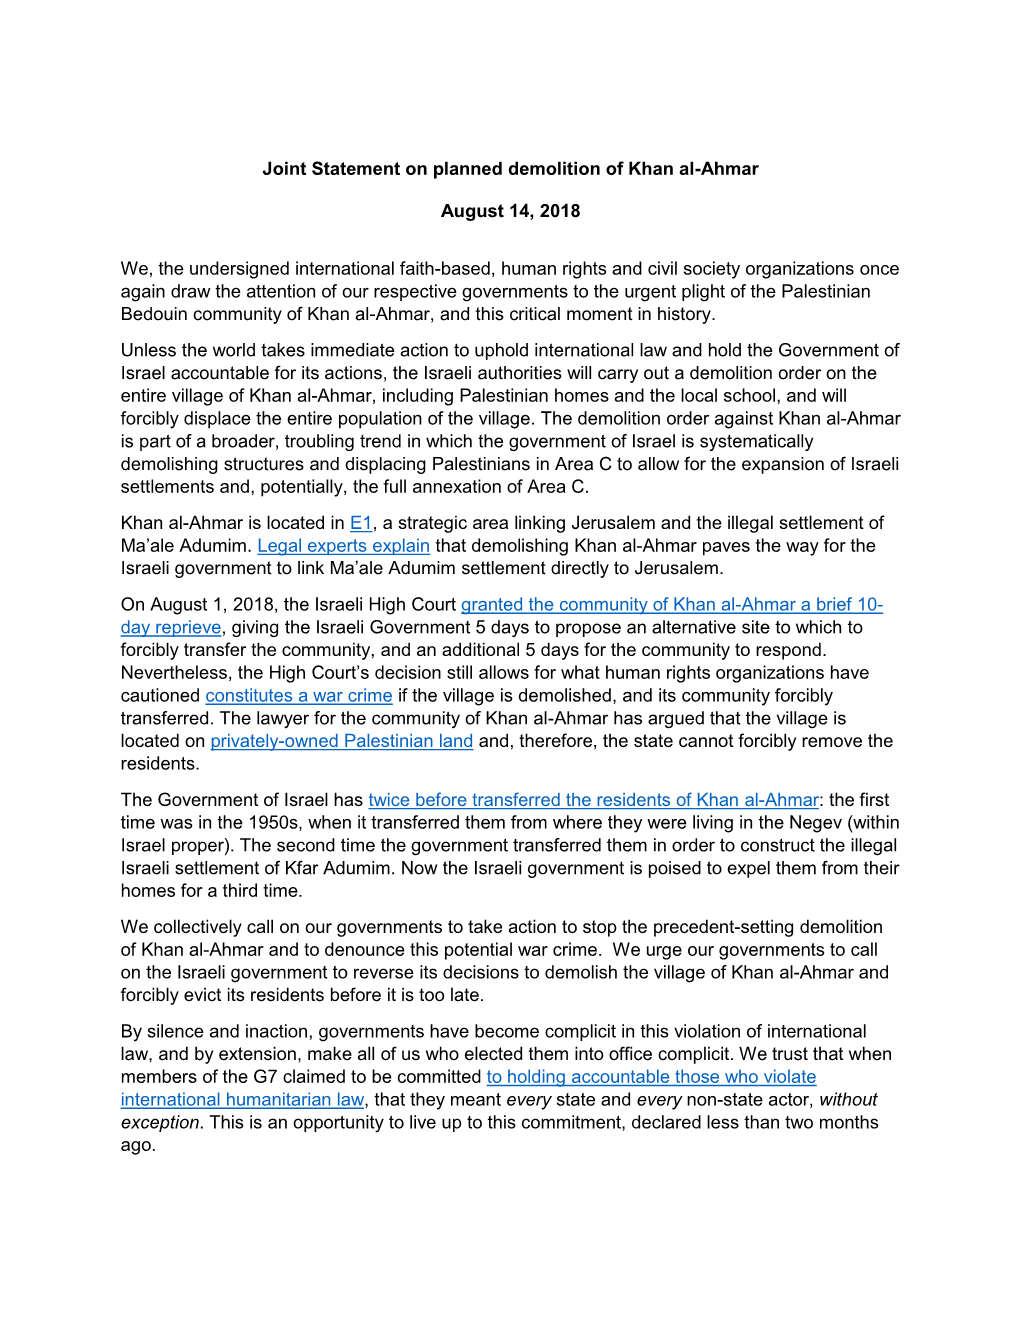 Joint Statement on Khan Al-Ahmar